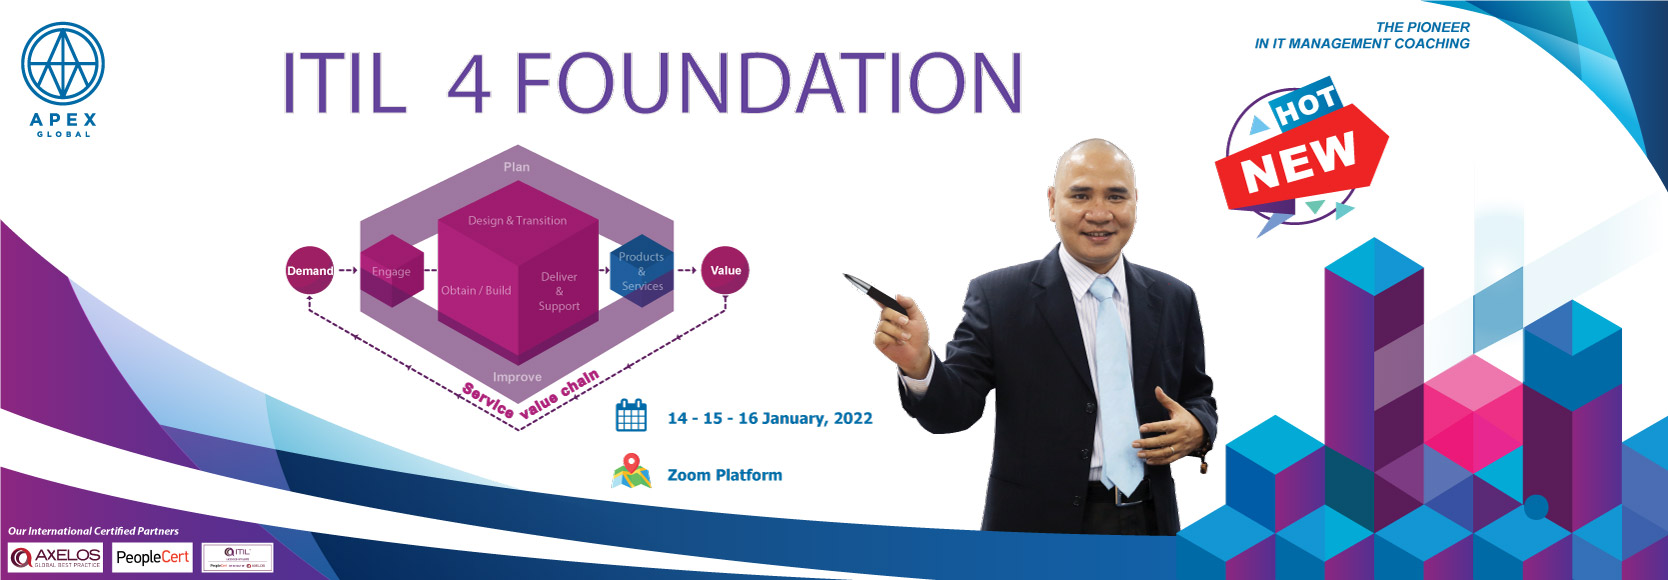 ITIL-4-Foundation-Apex-global-1